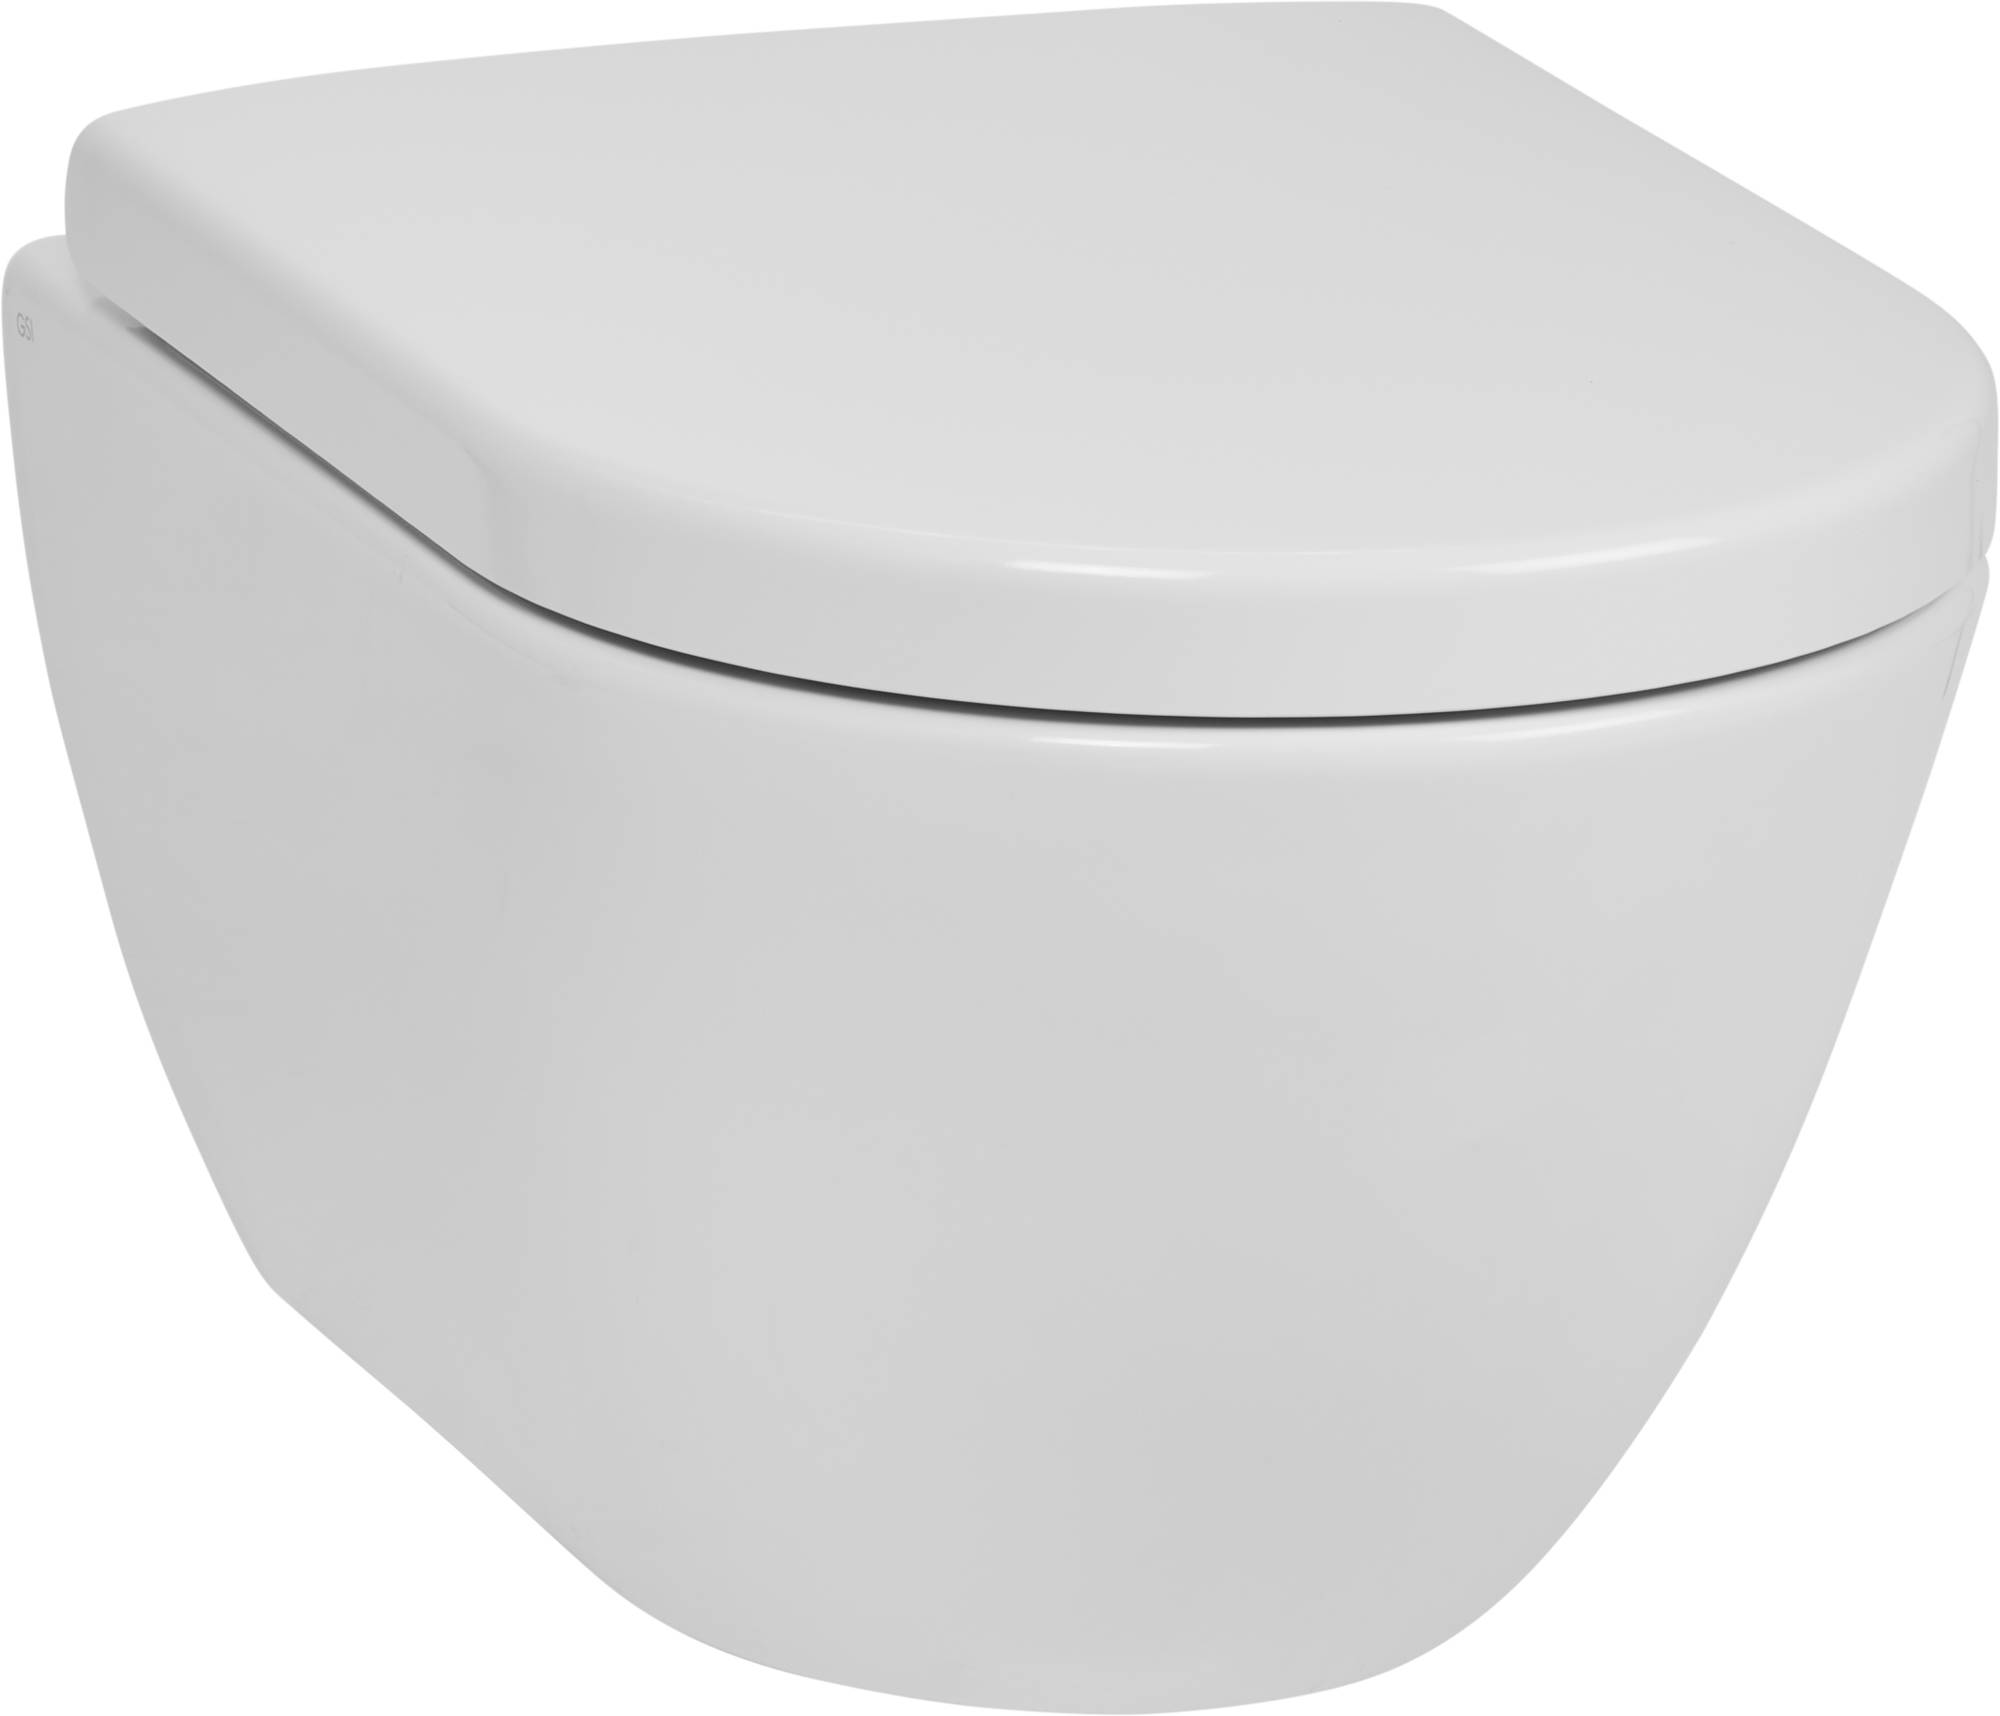 Ben Segno Hangtoilet - Toiletpot - Inclusief WC bril - Compact - Xtra glaze+ - Free Flush - Wit